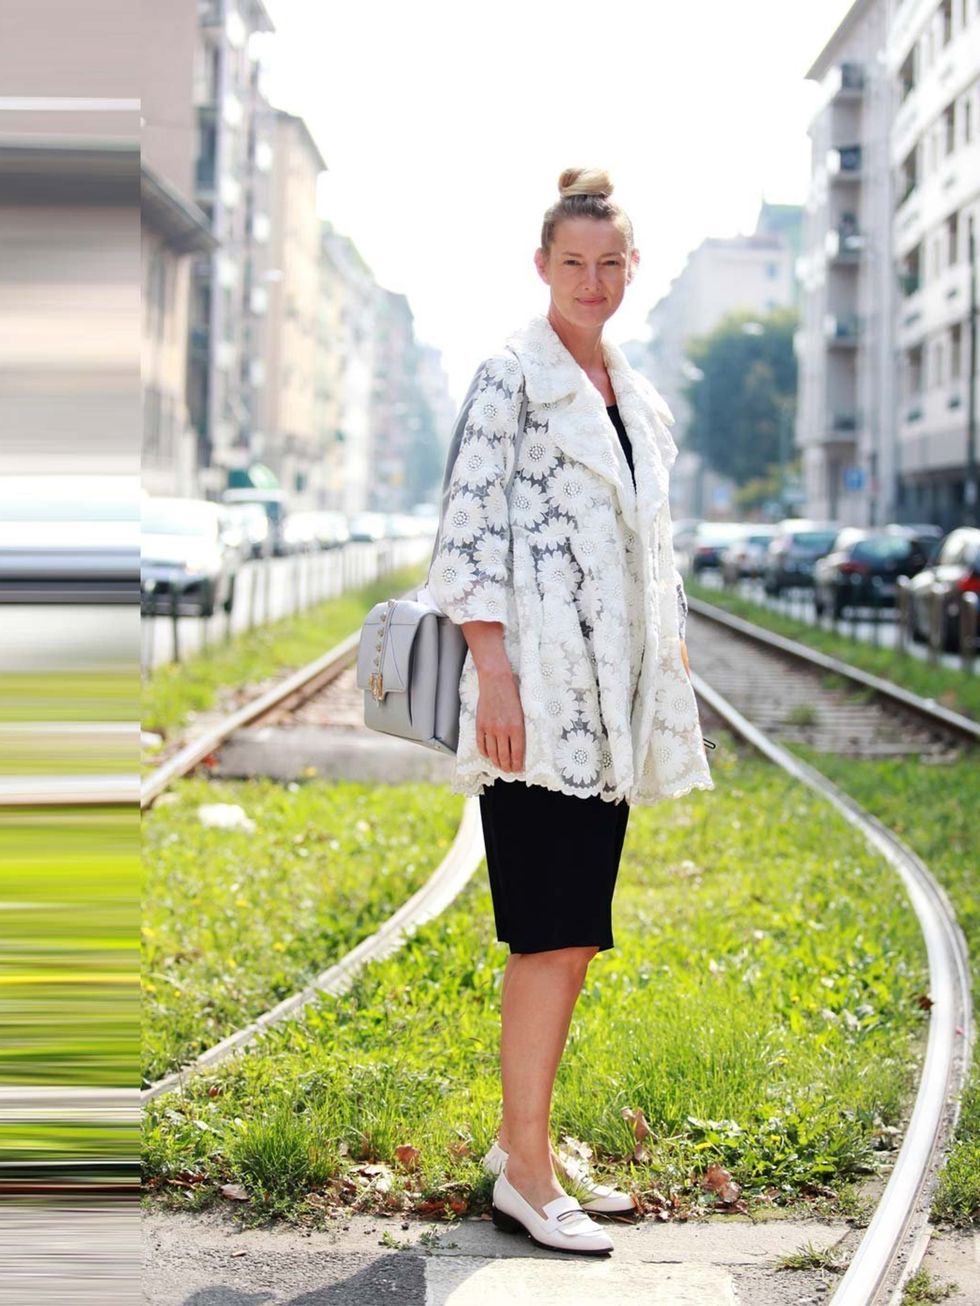 <p>Rebecca Lowthorpe</p><p>Wearing <a href="http://www.elleuk.com/catwalk/designer-a-z/simone-rocha/spring-summer-2014">Simone Rocha</a>.</p><p><a href="http://www.elleuk.com/style/street-style/london-fashion-week-street-style2">Click through our LFW stre